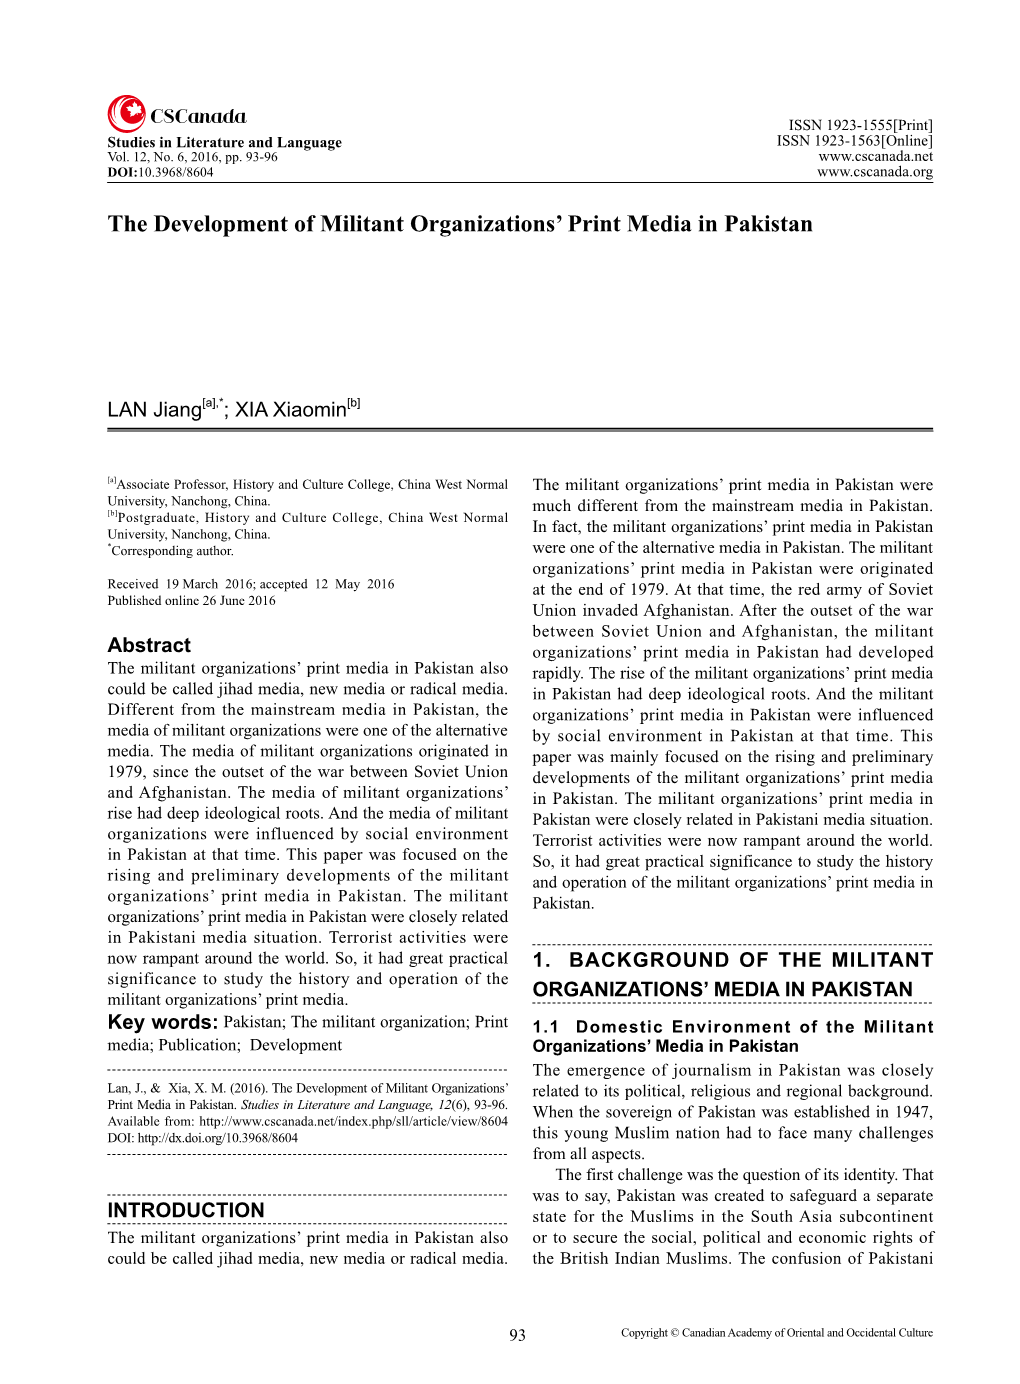 The Development of Militant Organizations' Print Media in Pakistan